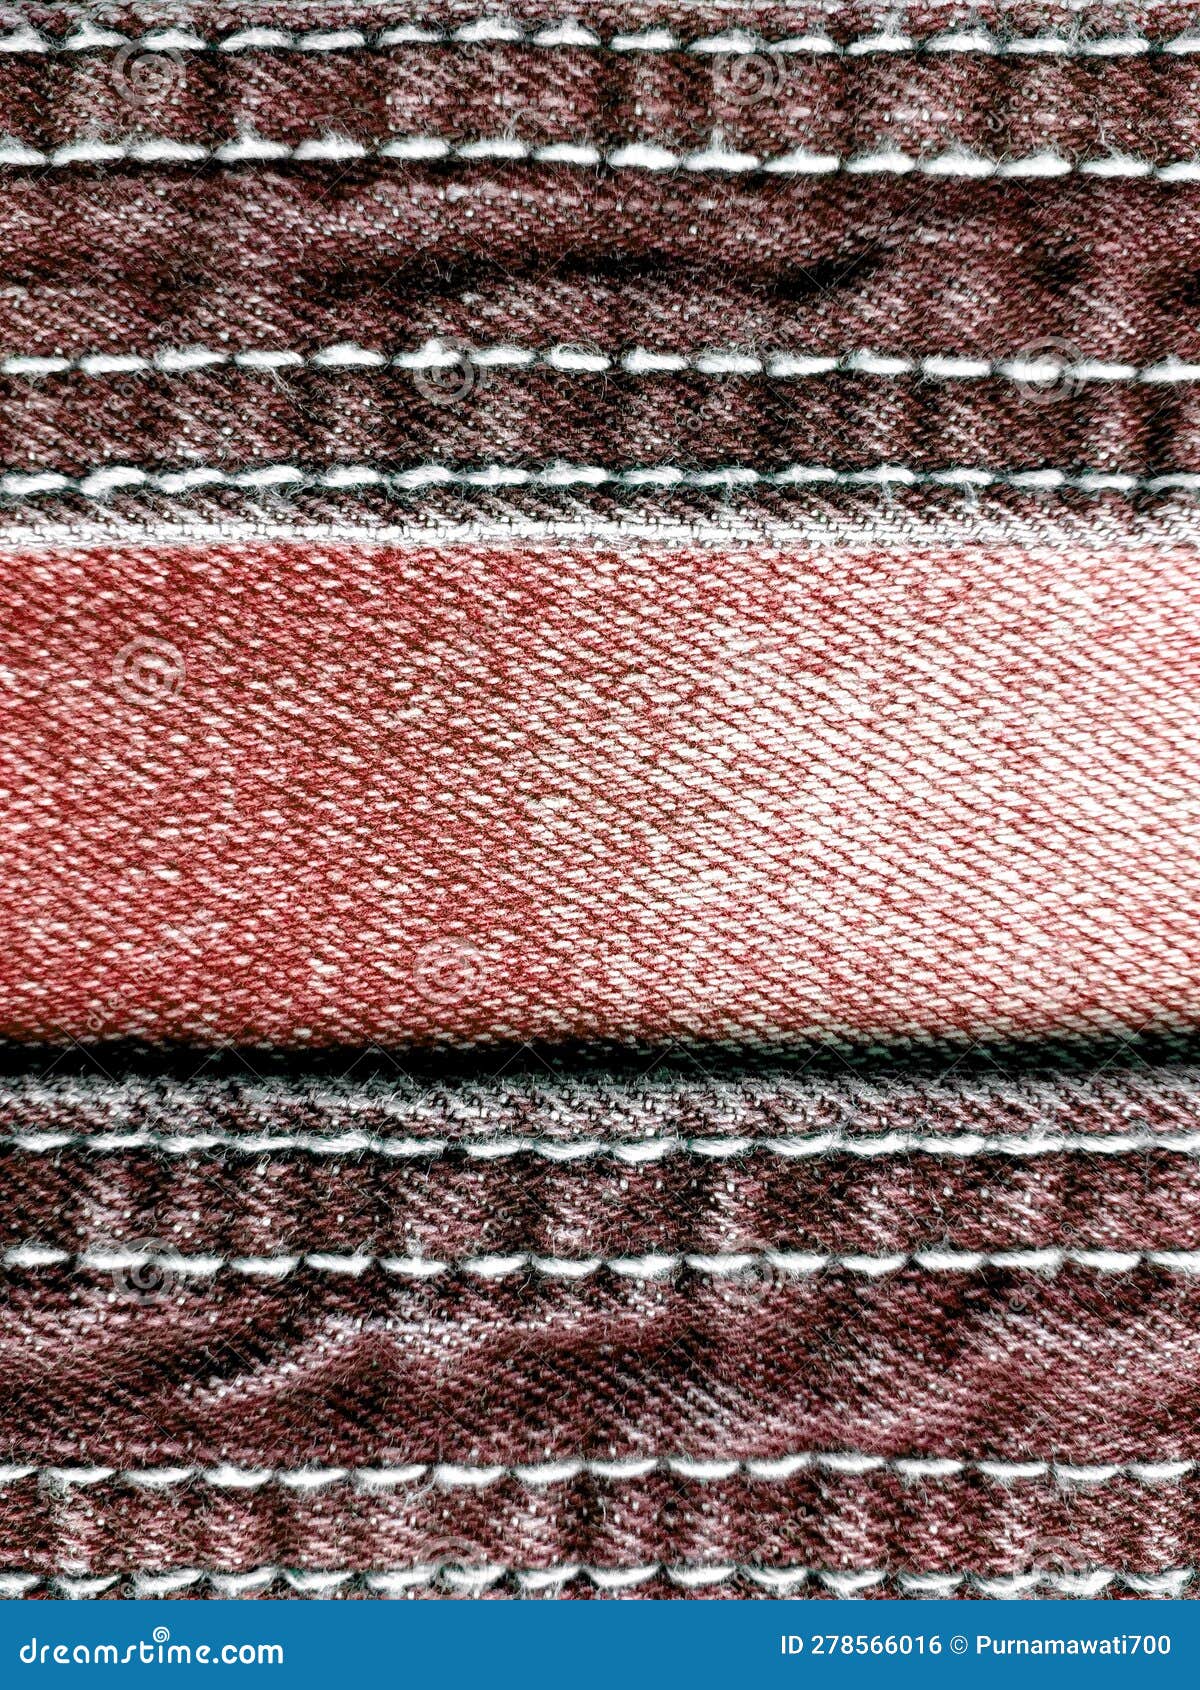 Red Denim Jeans Texture. Denim Background Texture for Design Stock ...